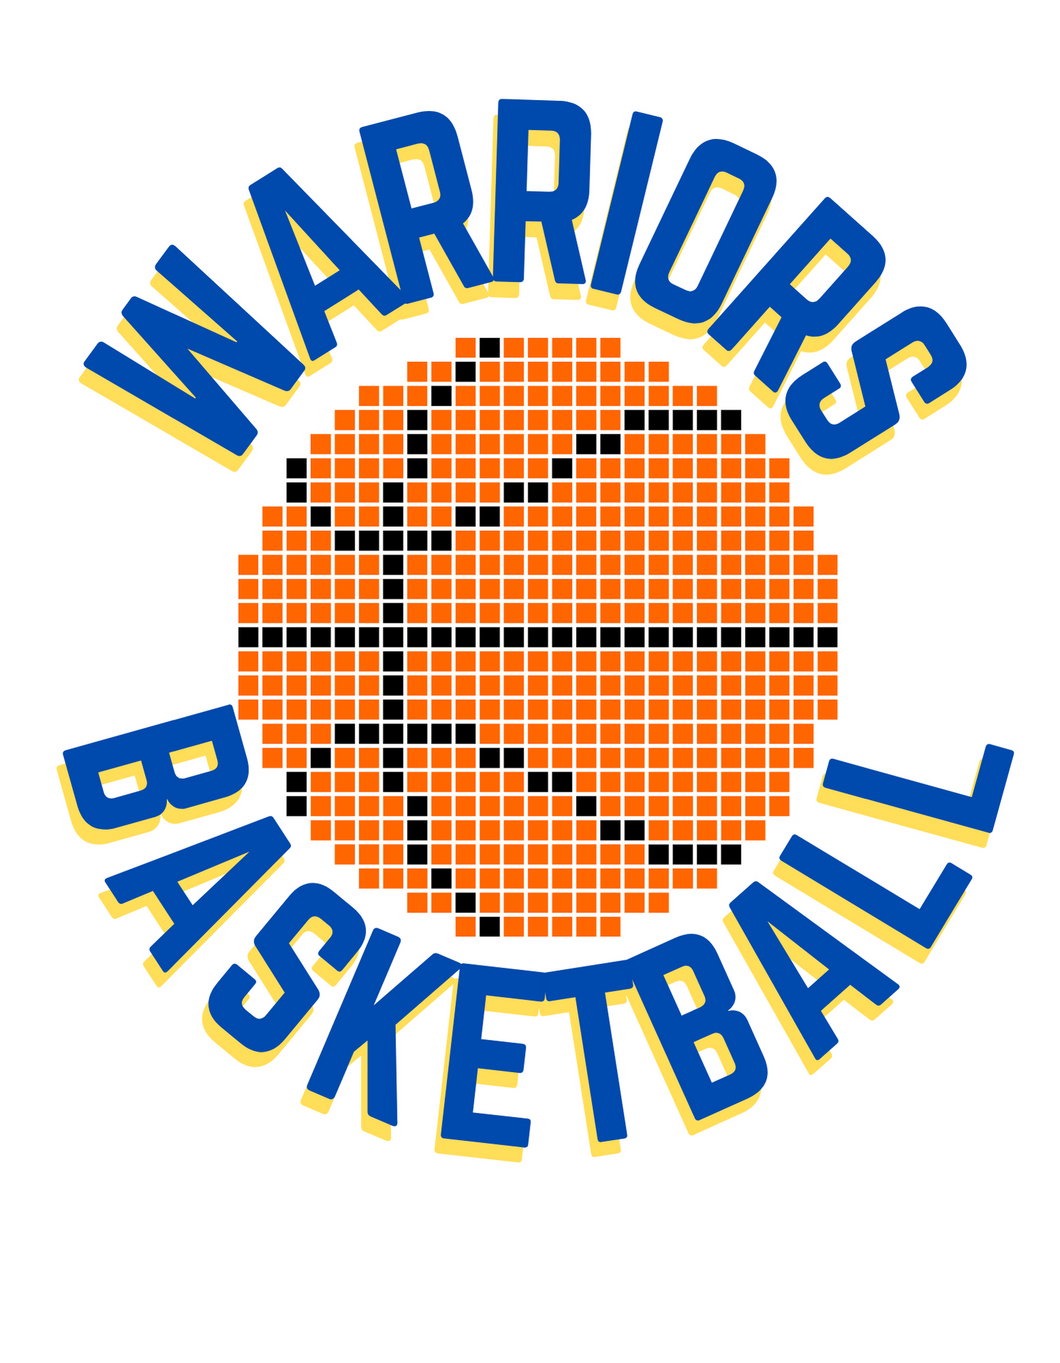 Warriors Basketball Hoodie